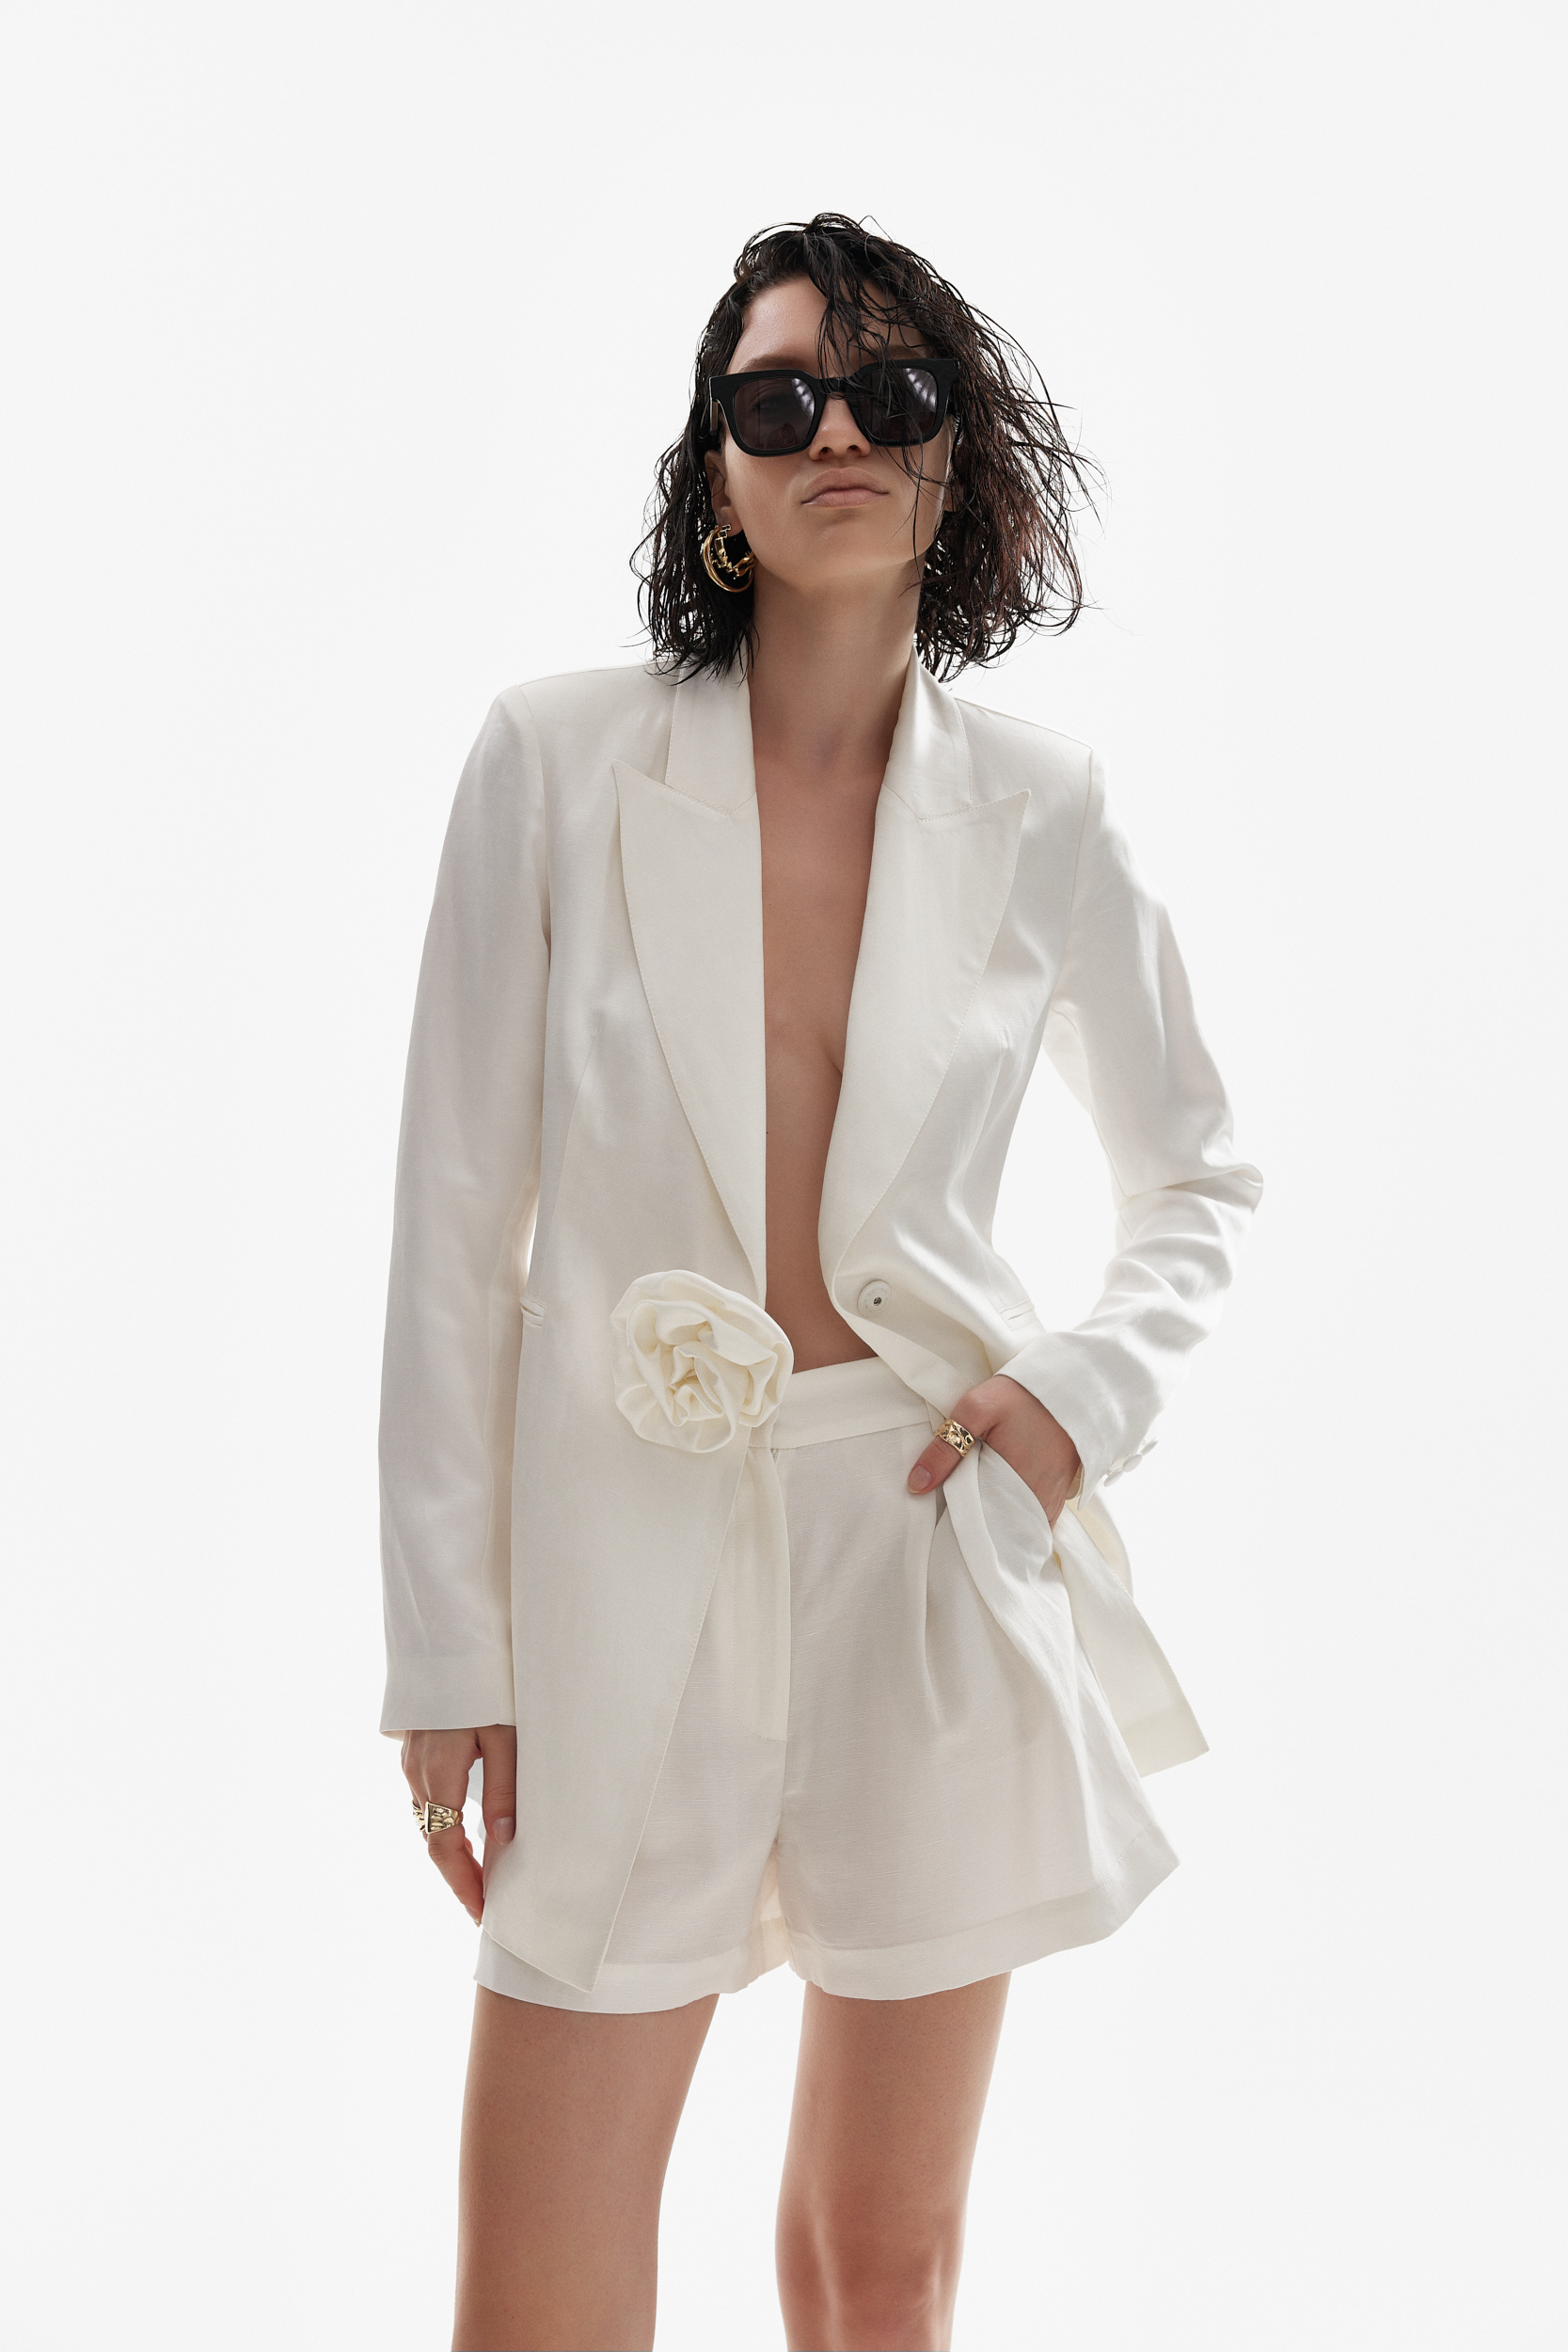 Rosette appliqué blazer in white linen - limited edition